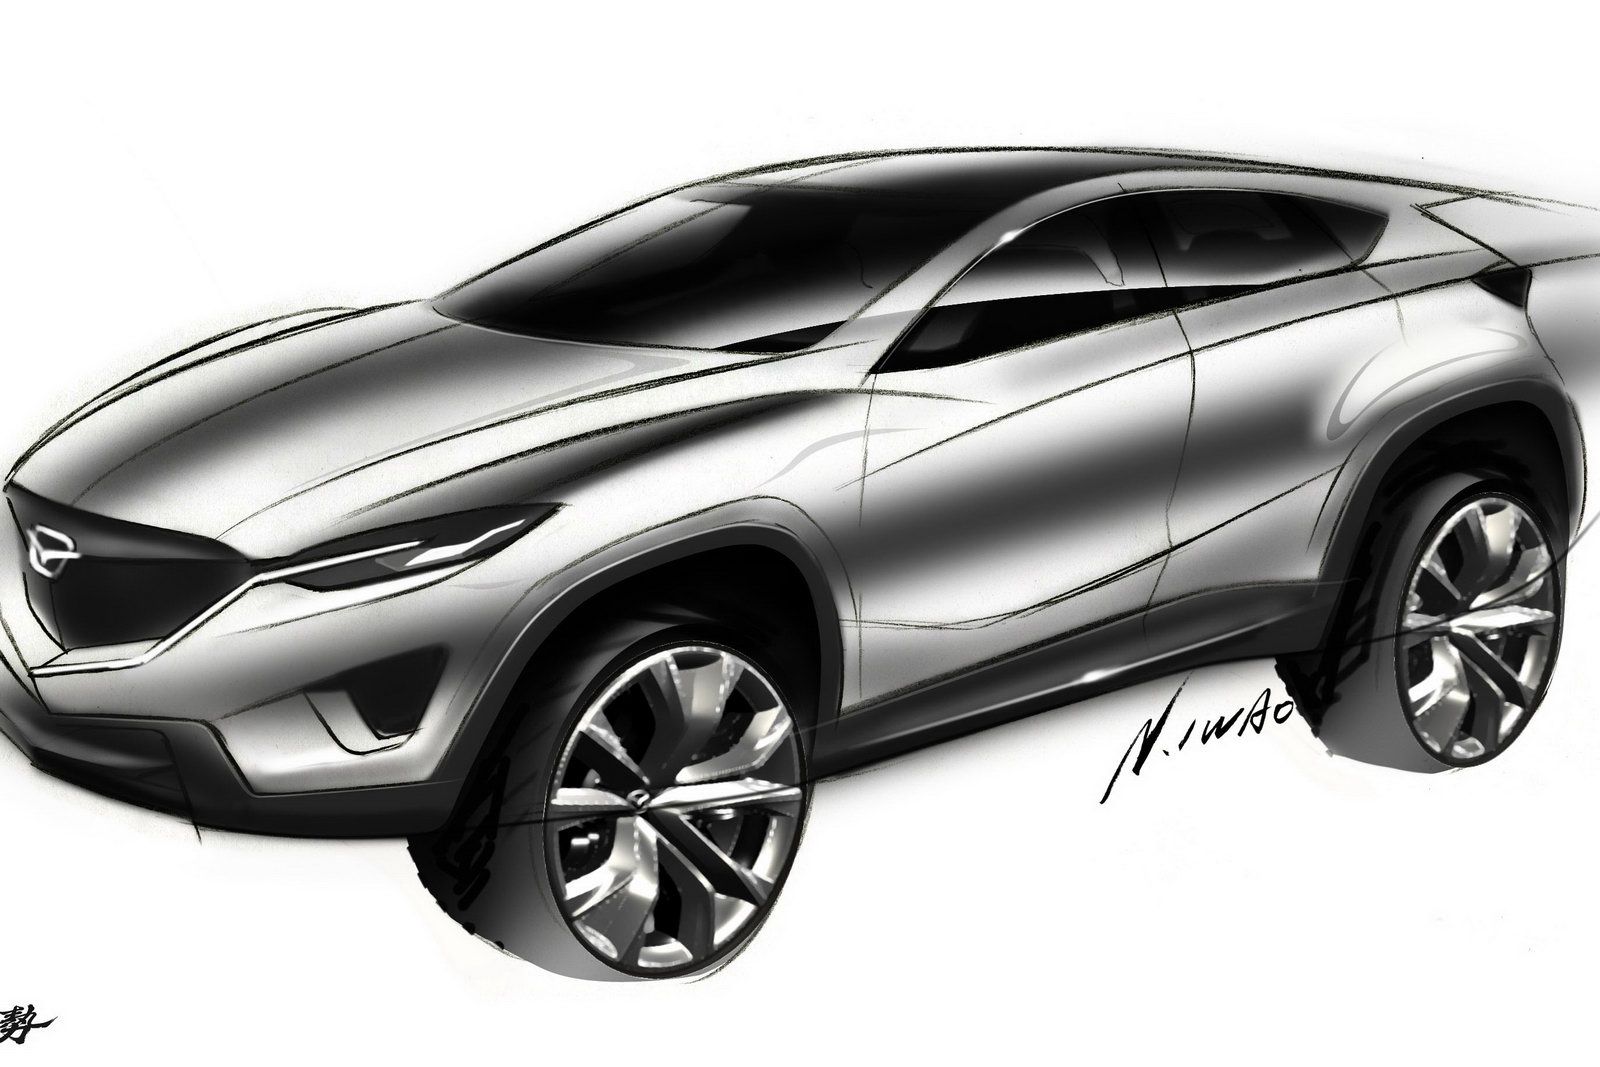 2011 Mazda Minagi Concept